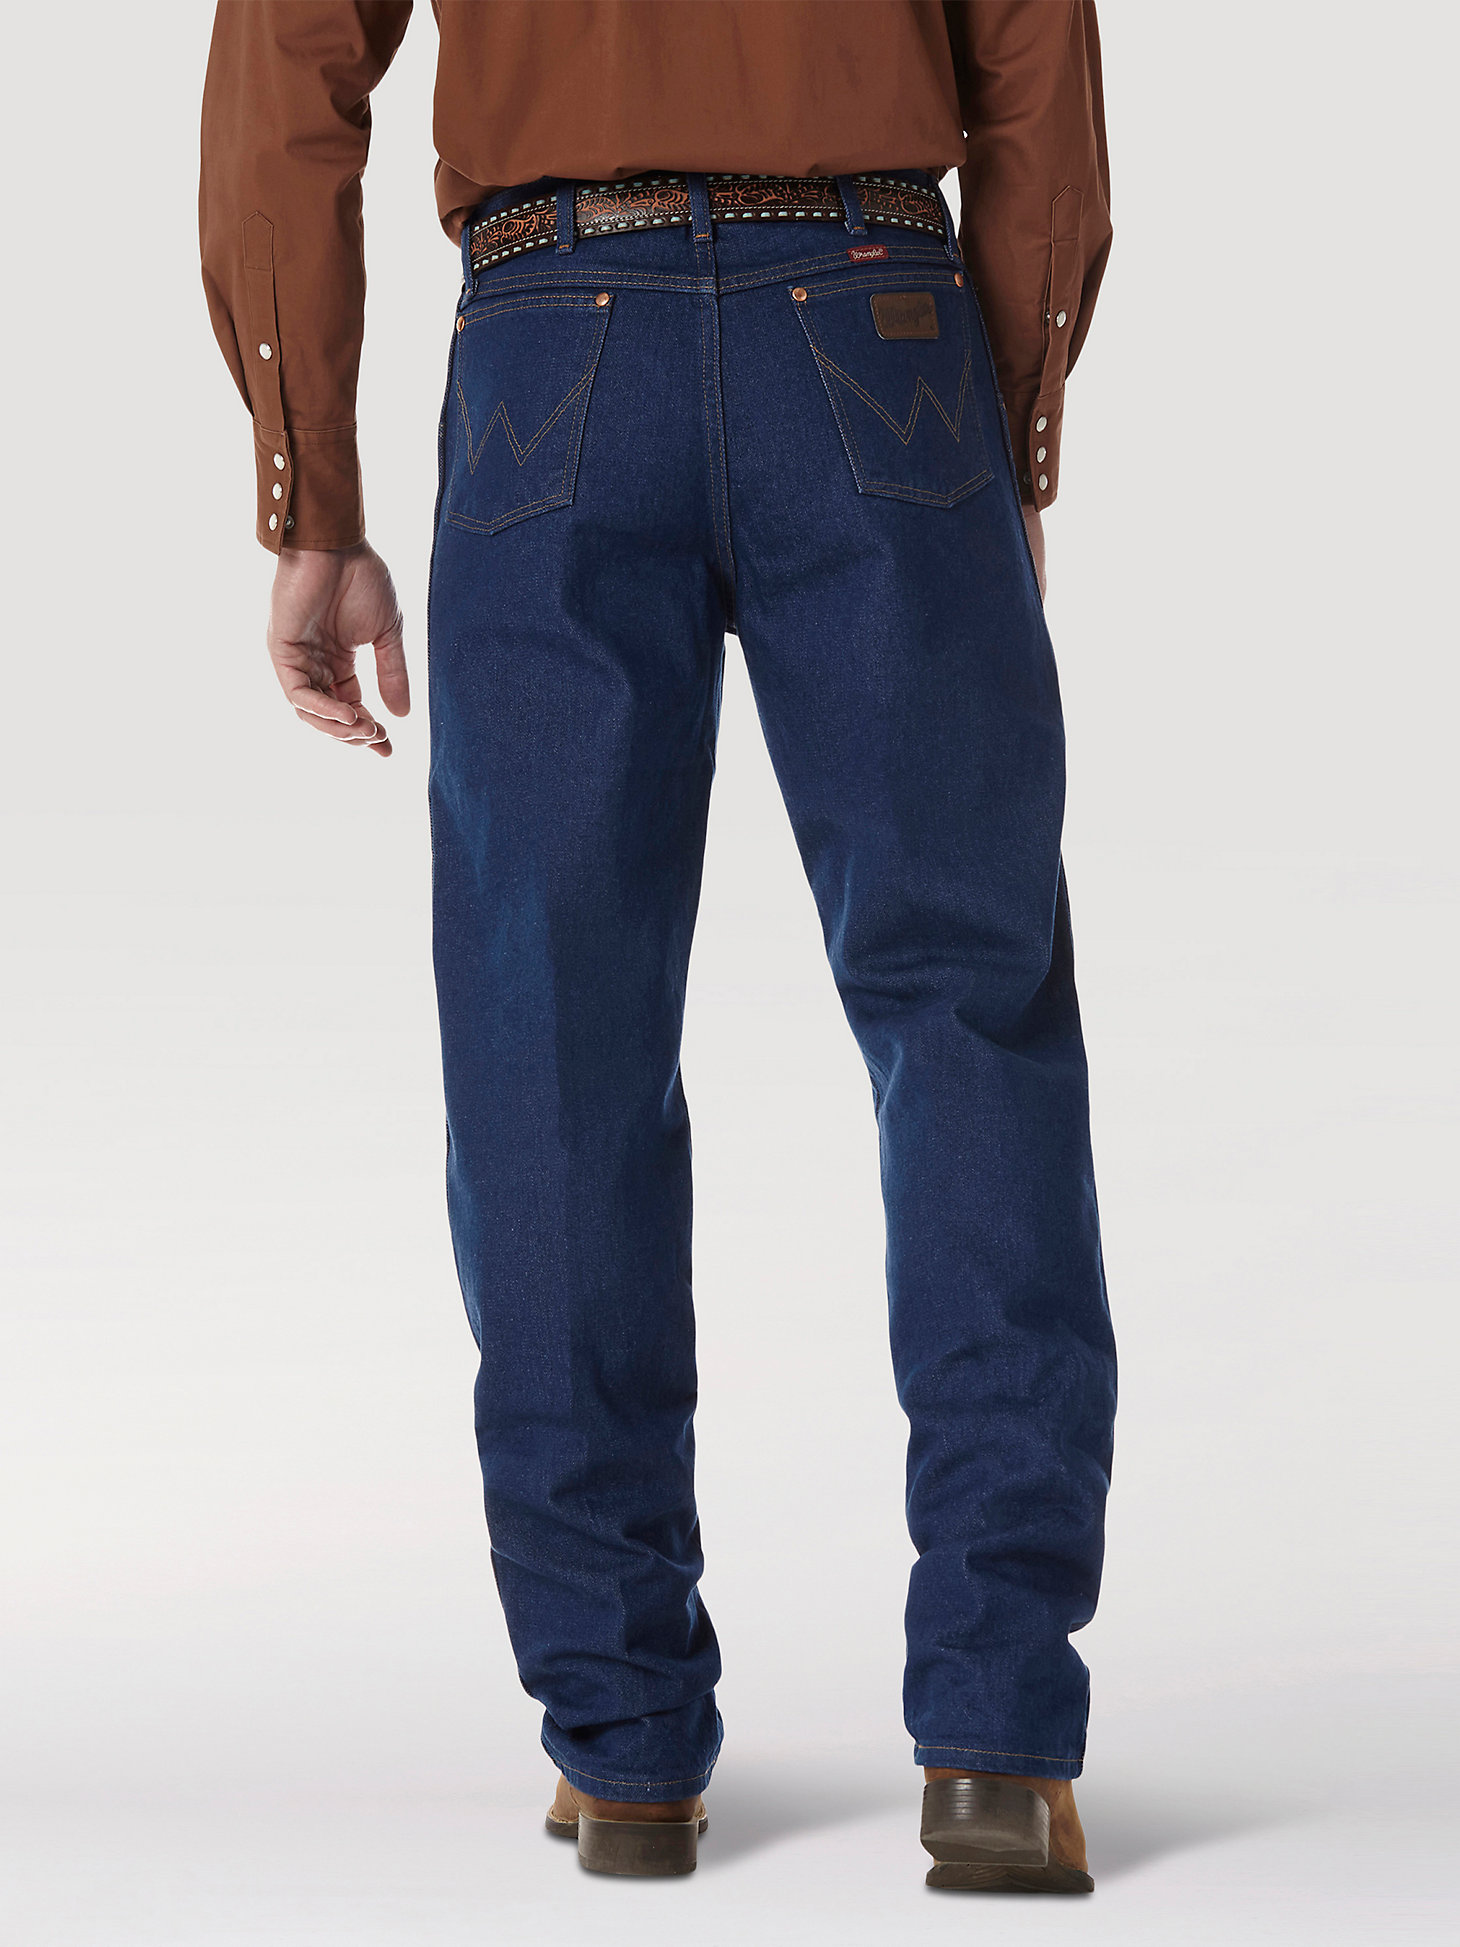 Wrangler® Cowboy Cut® Relaxed Fit Jean in Prewashed Indigo alternative view 2